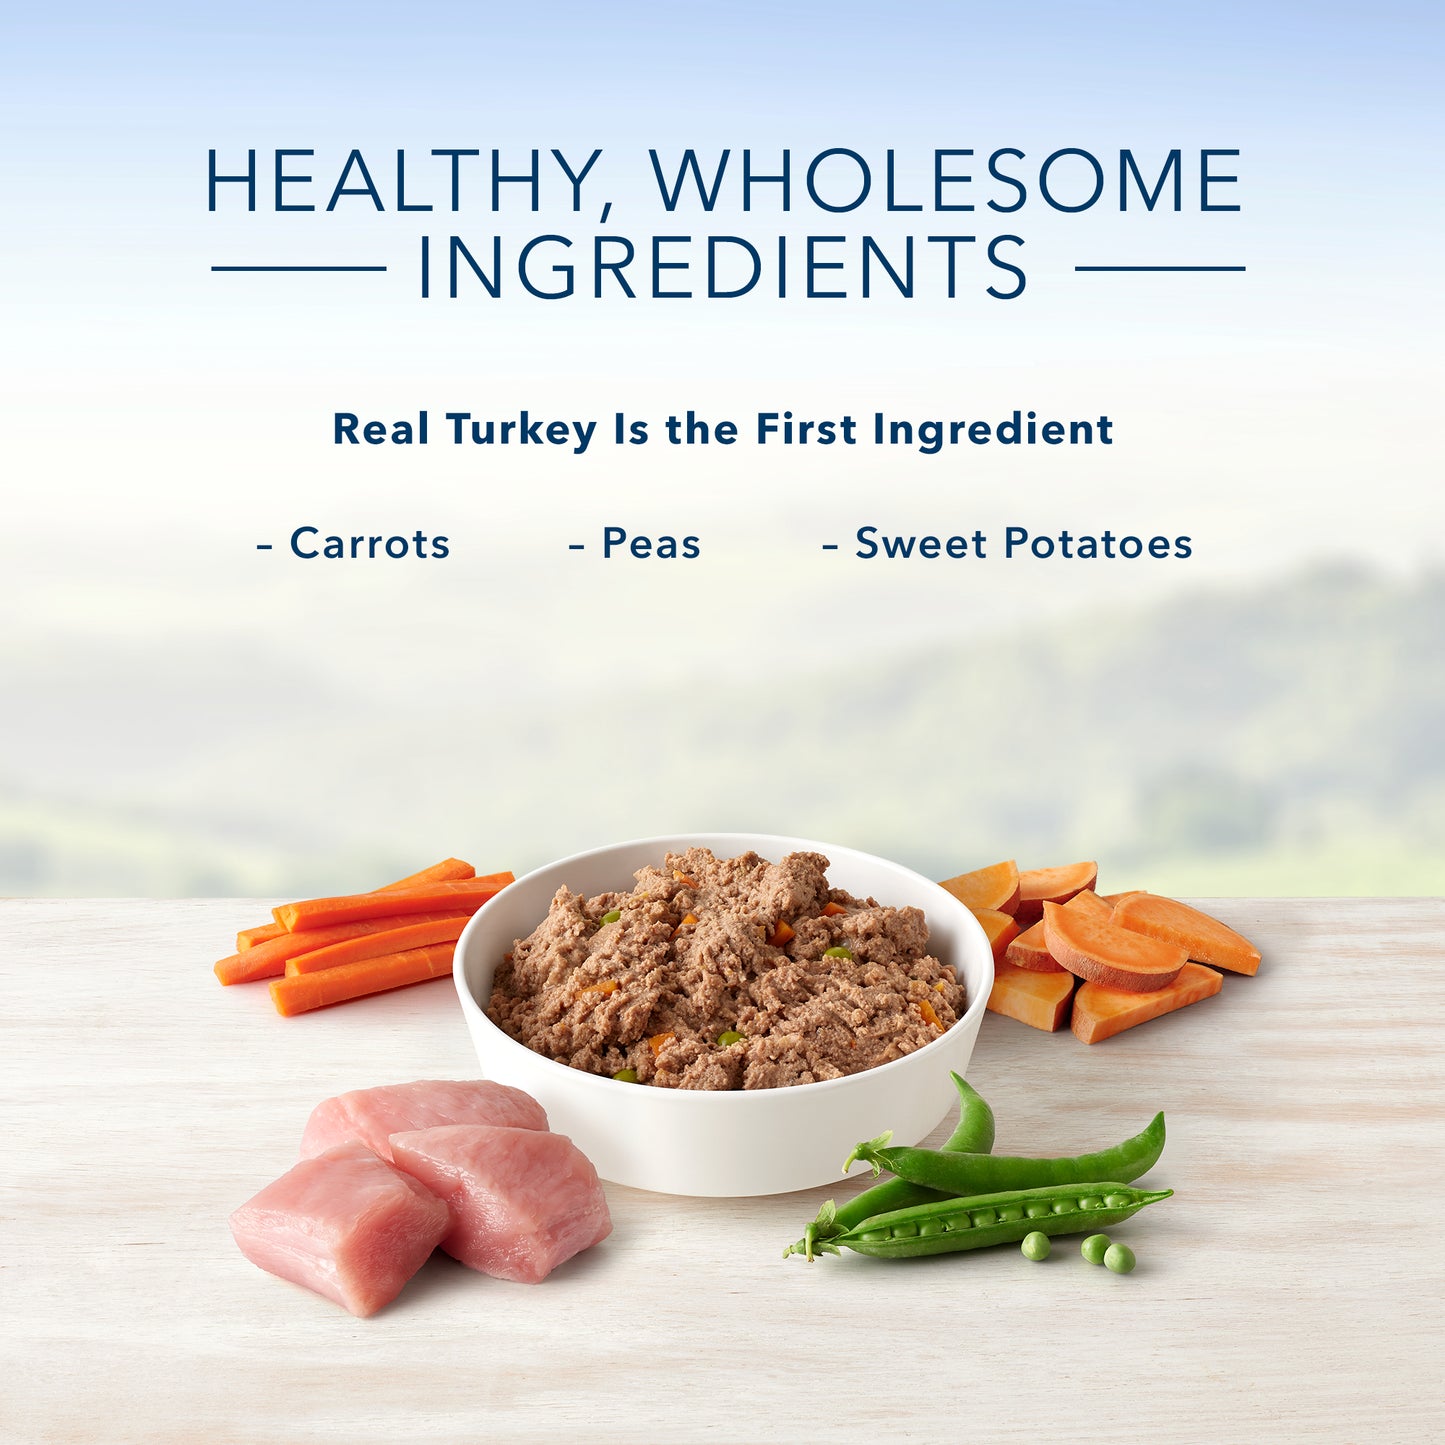 Blue Buffalo Homestyle Recipe Natural Adult Wet Dog Food, Turkey Meatloaf 12.5-oz, Case of 12